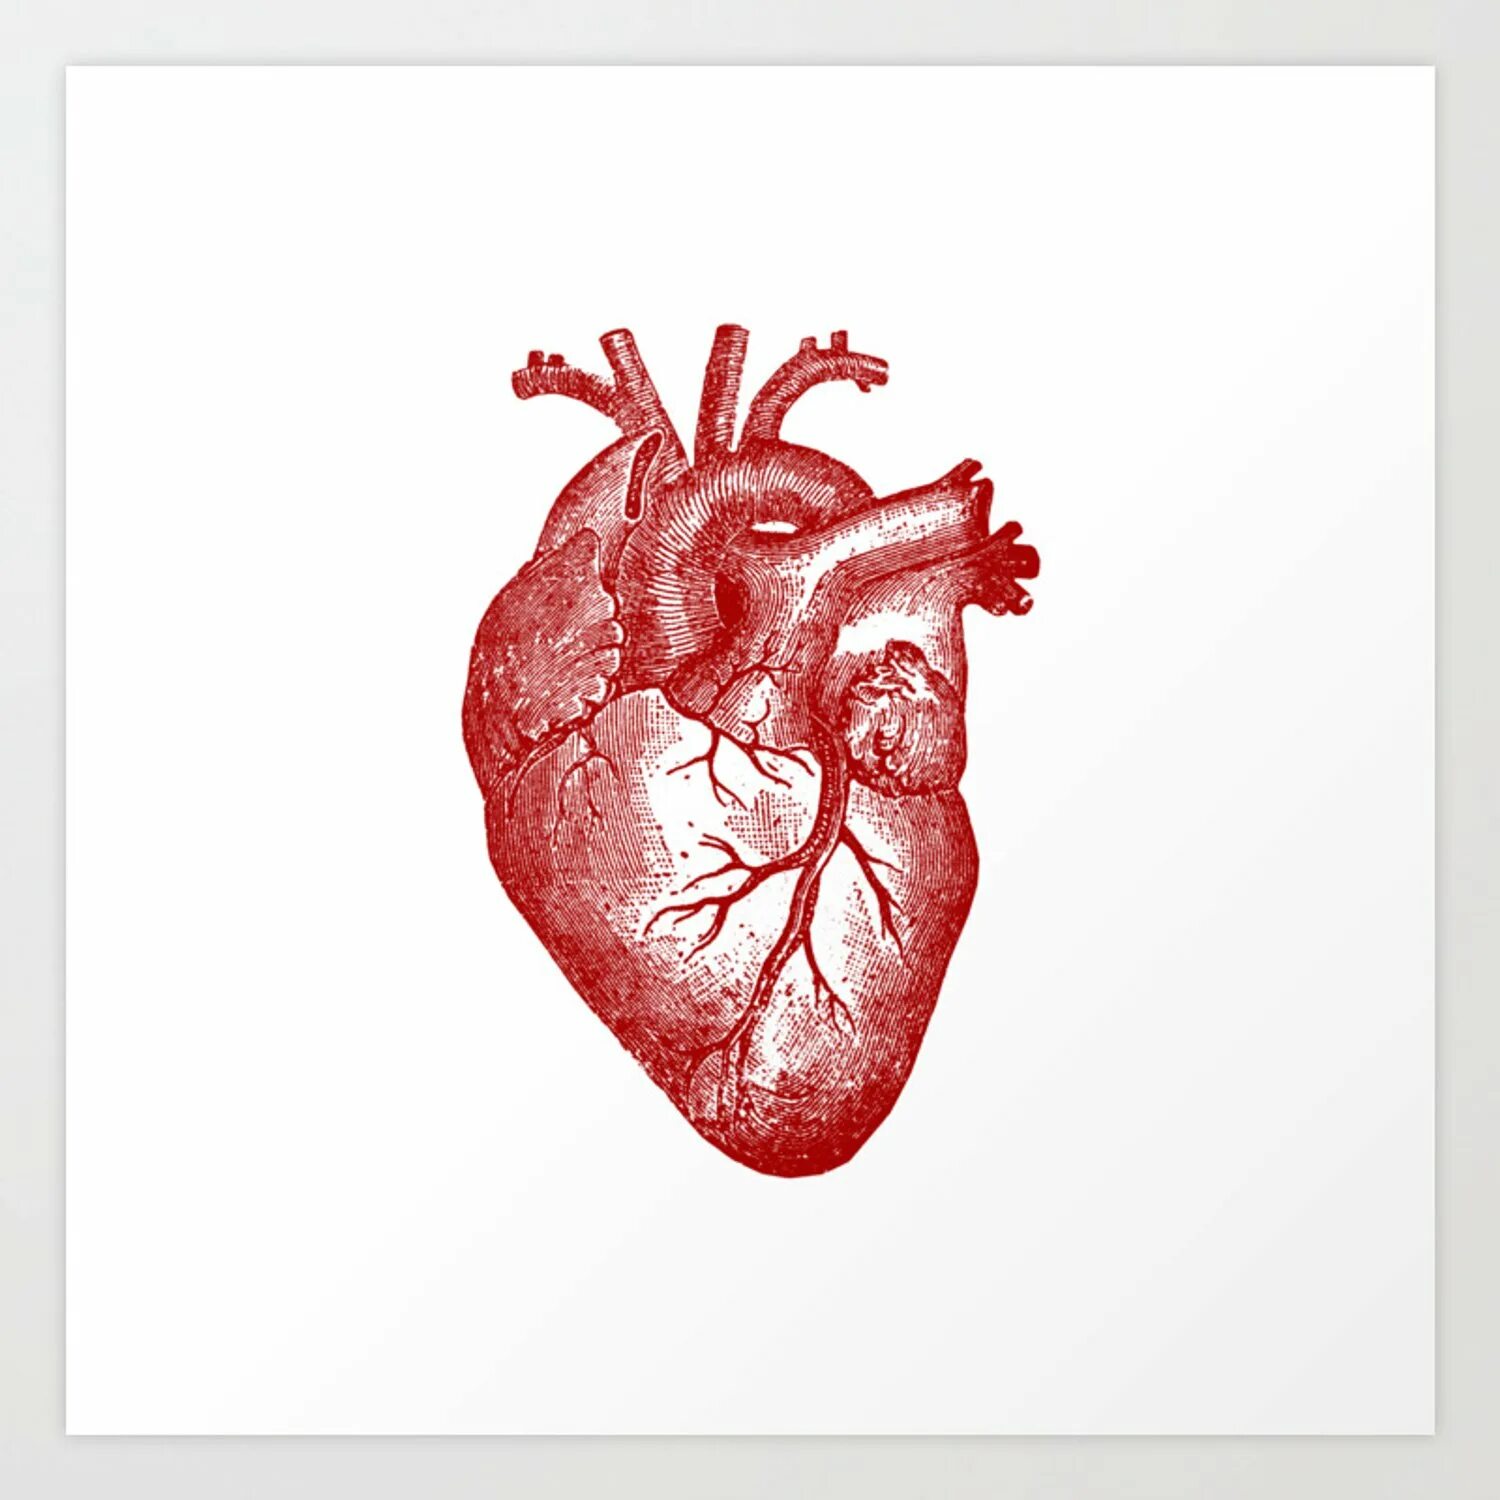 Орган сердце человека рисунок. Сердце анатомия. Анатомическое сердце человека.